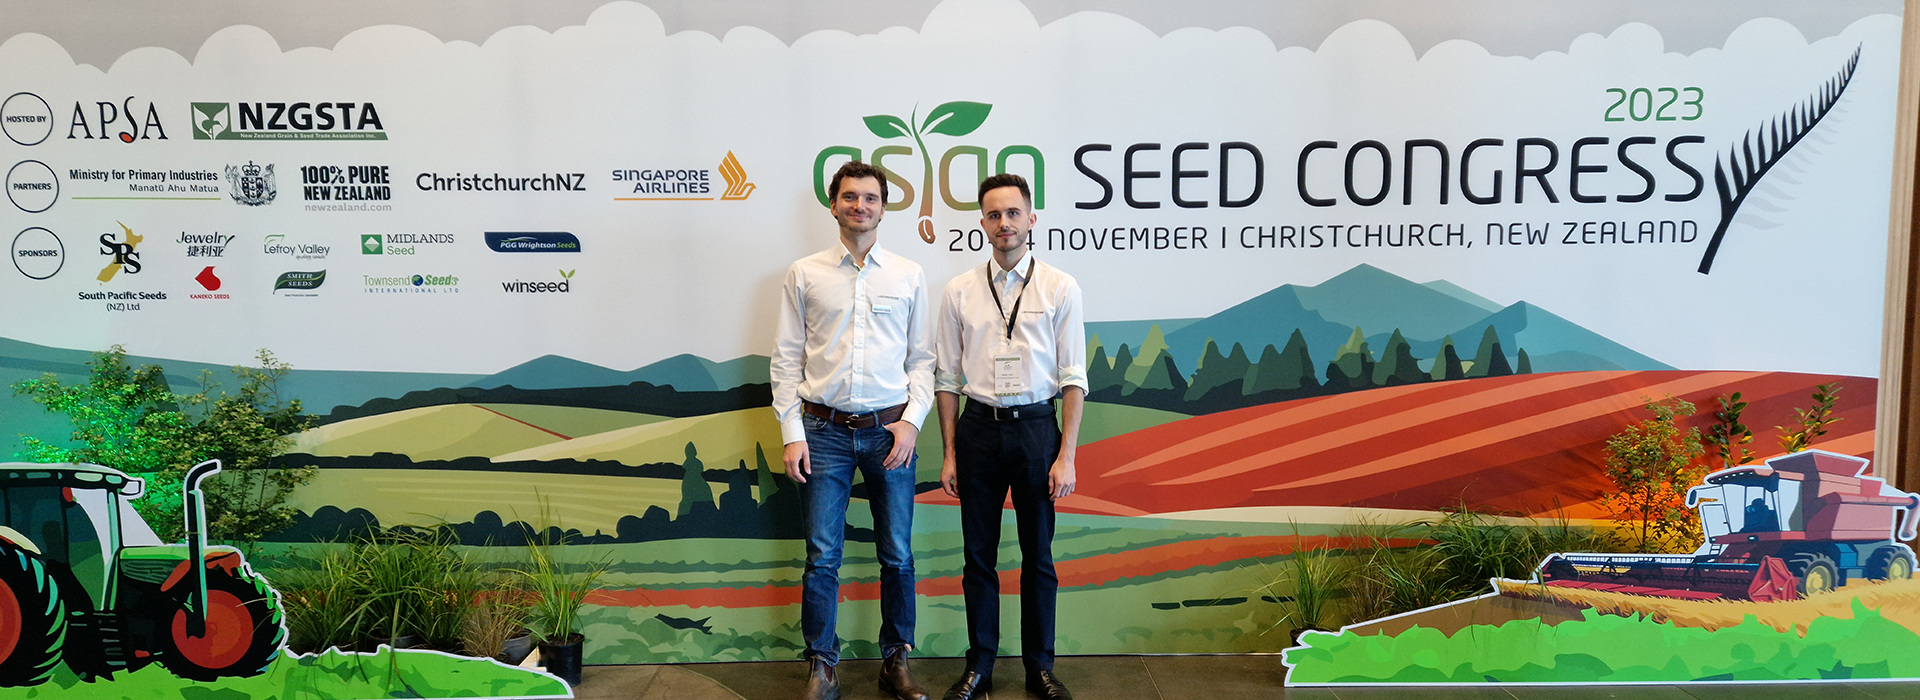 Asian Seed Congress